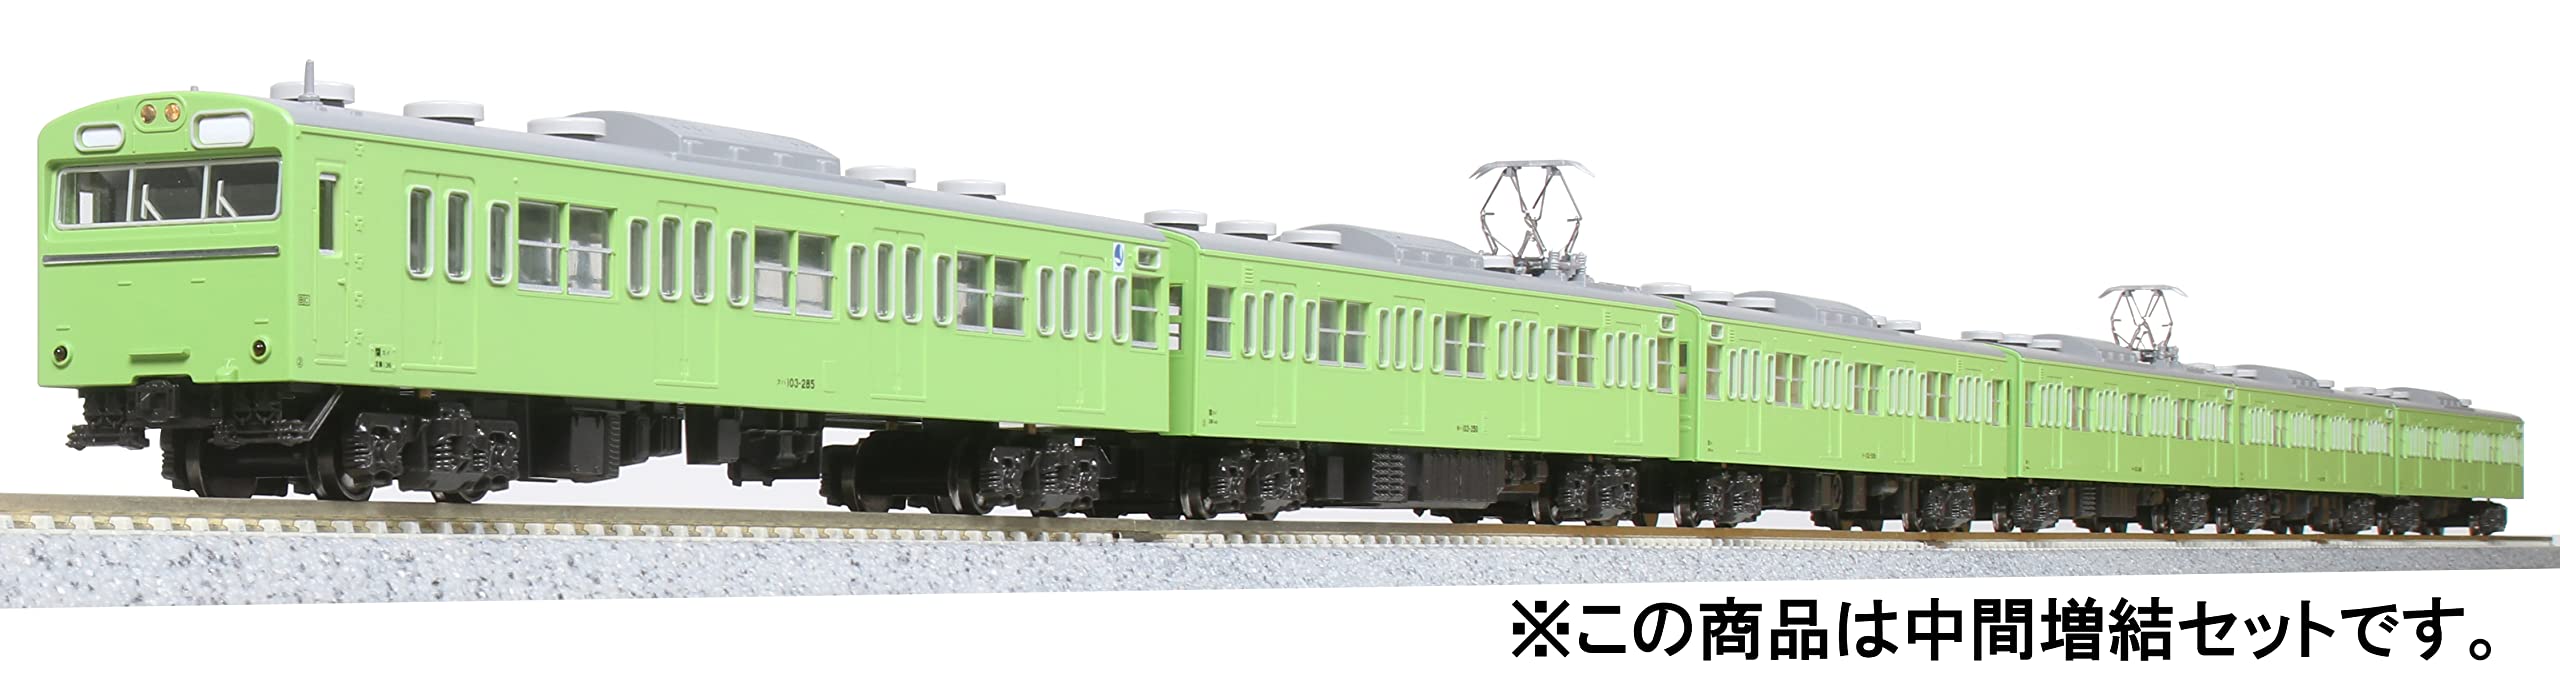 Kato N Gauge 103 Series Intermediate 3-Car Set Railway Model Train 10-1744C